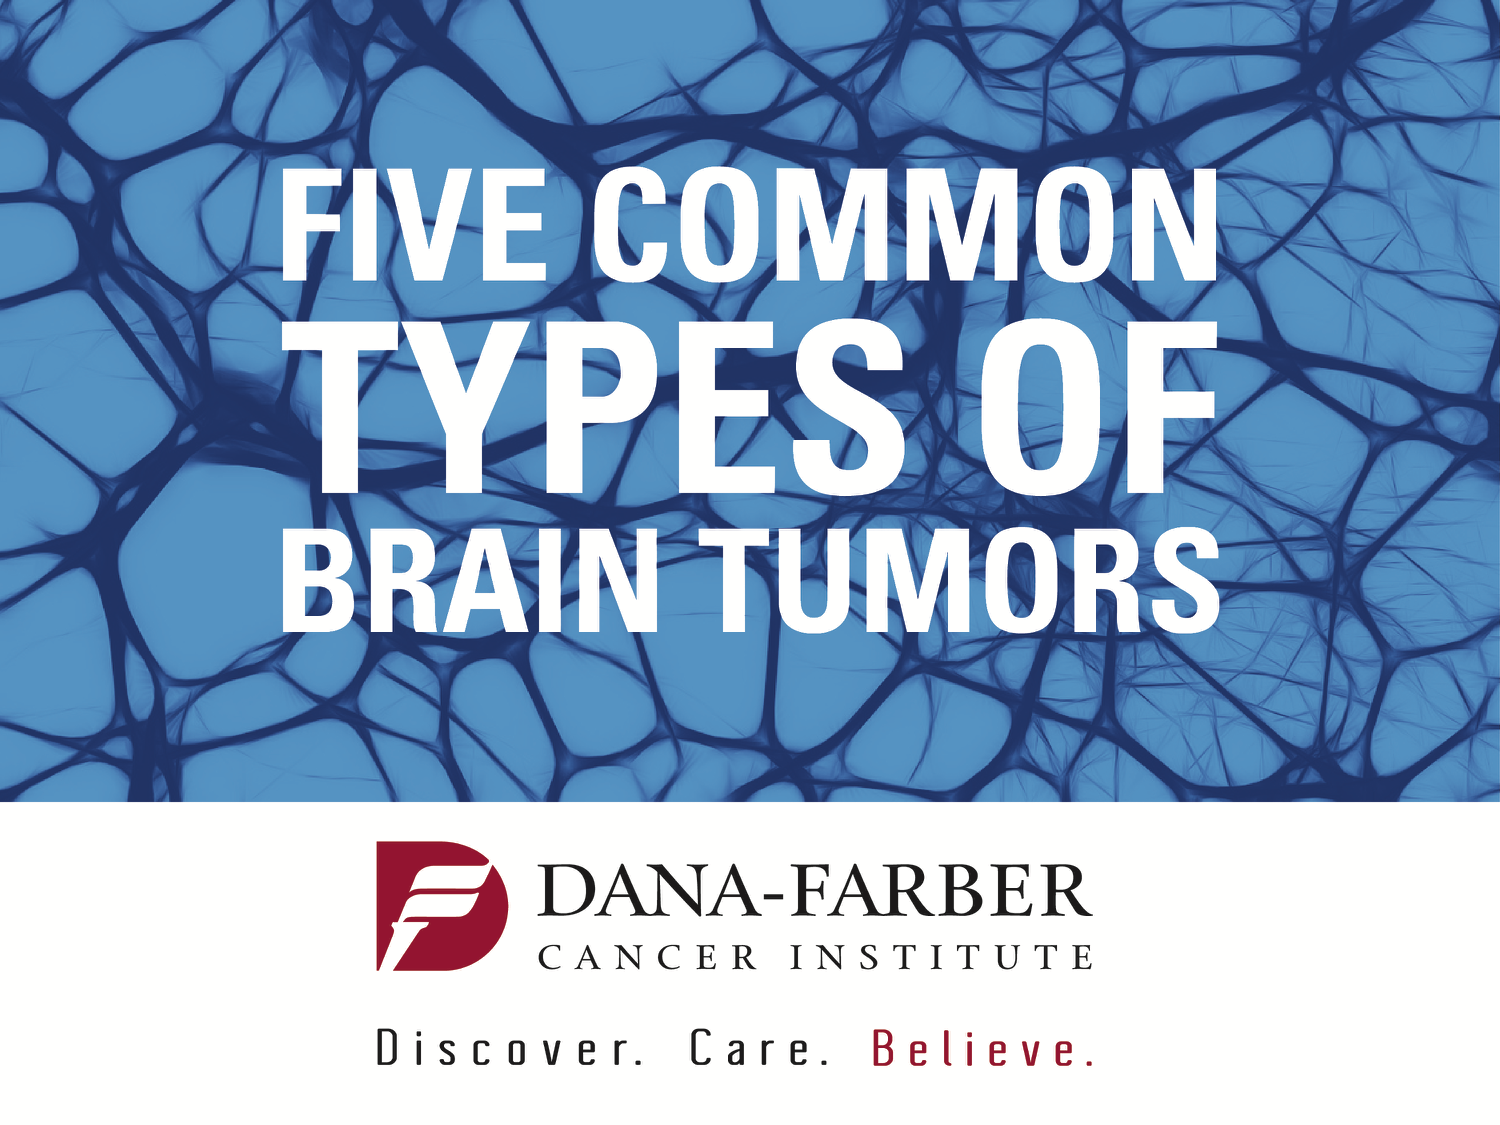 Five common types of brain tumors: glioblastoma, lower-grade gliomas, primary CNS (central nervous system) lymphoma, brain metastases (secondary brain tumors), meningiomas.